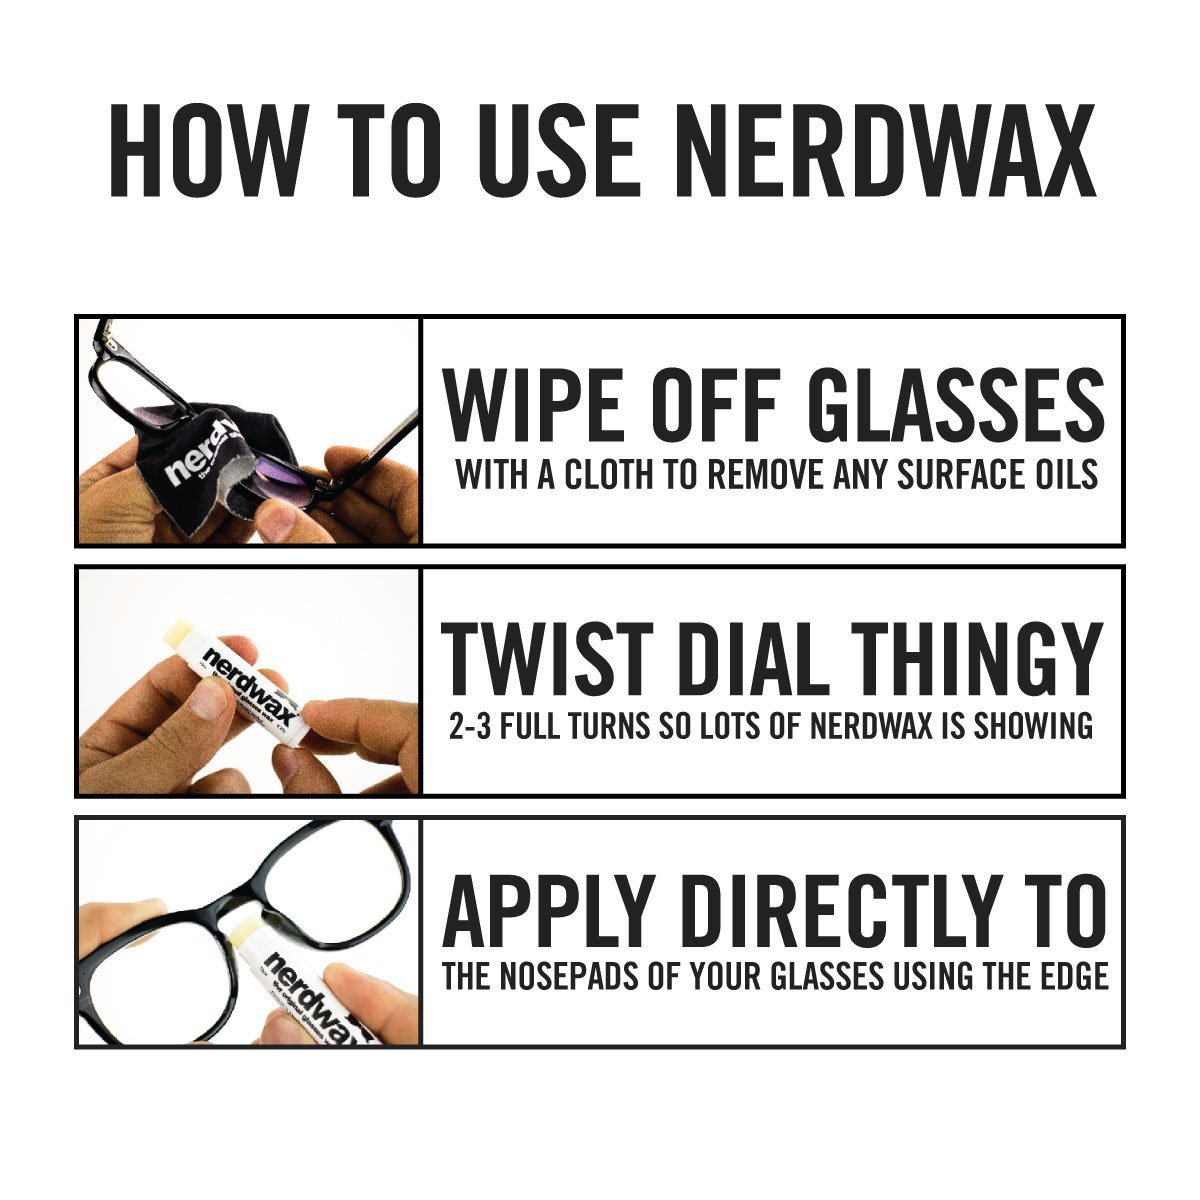 Nerdwax Review - DroidHorizon